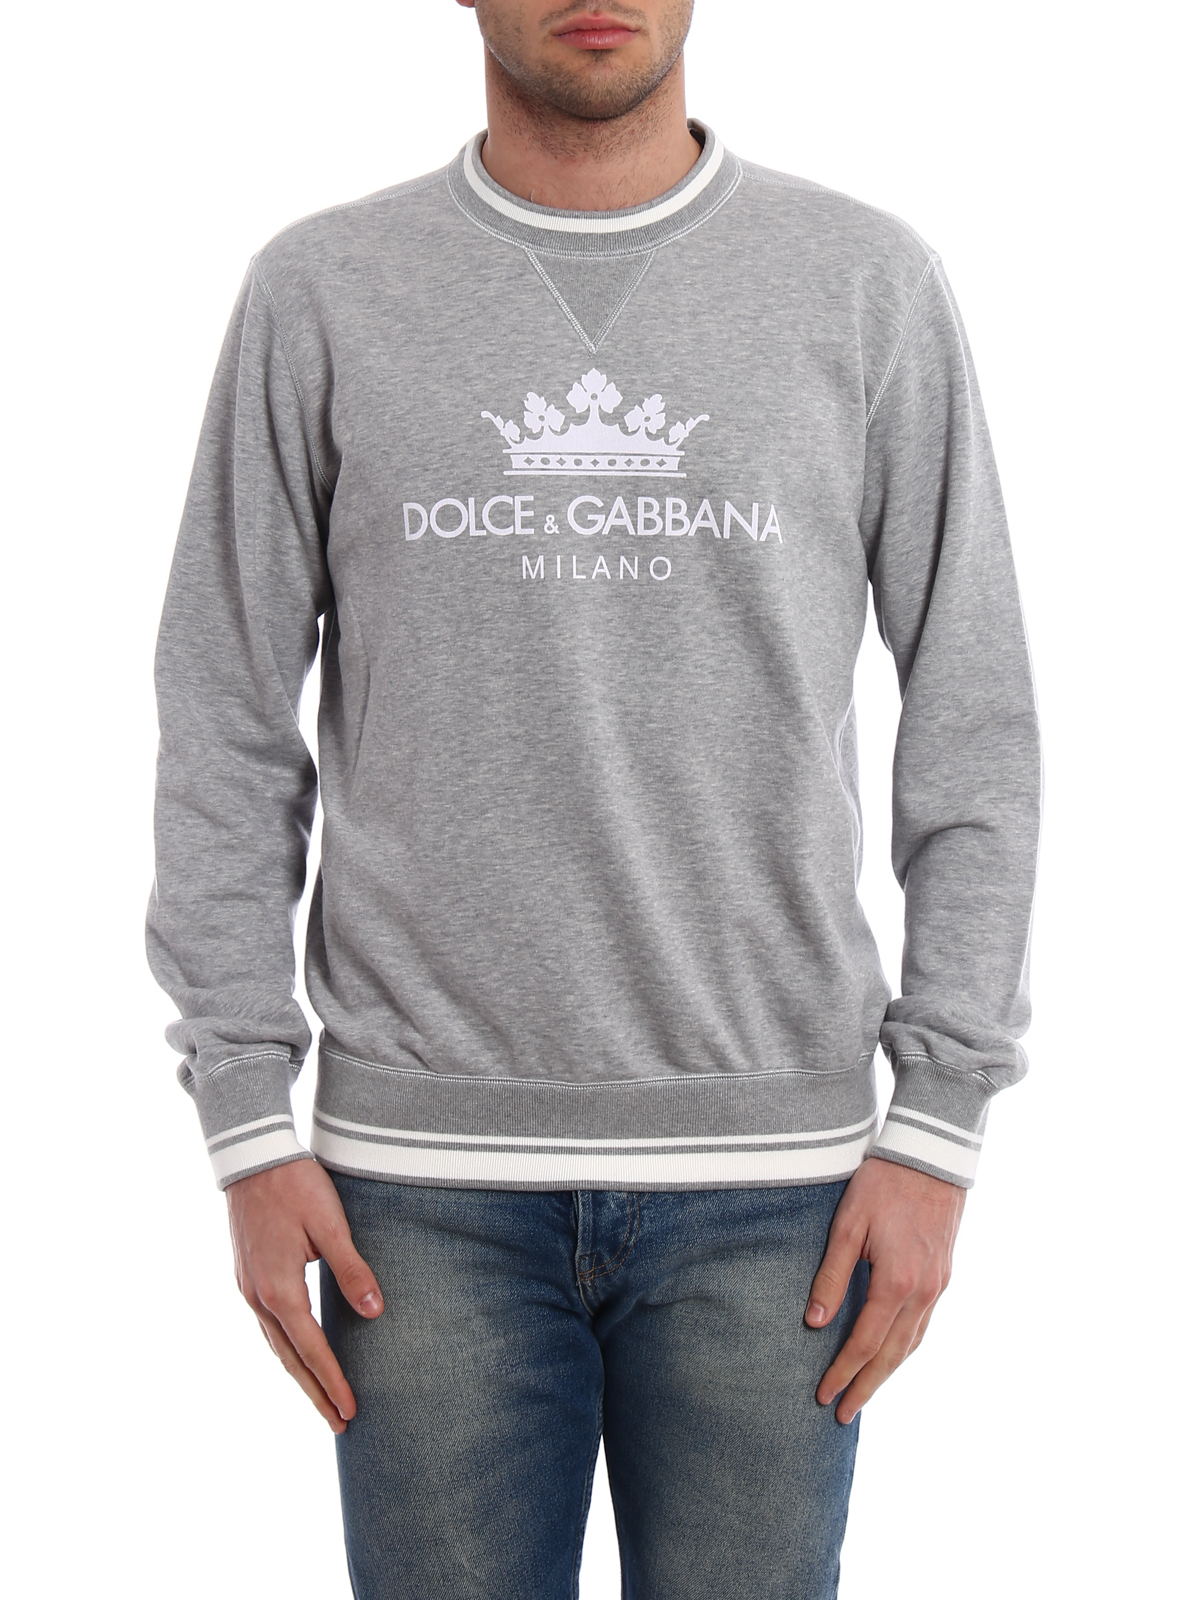 undergrundsbane koste krigsskib Sweatshirts & Sweaters Dolce & Gabbana - Crown logo melange grey sweatshirt  - G9KJ3THU7ALS8294